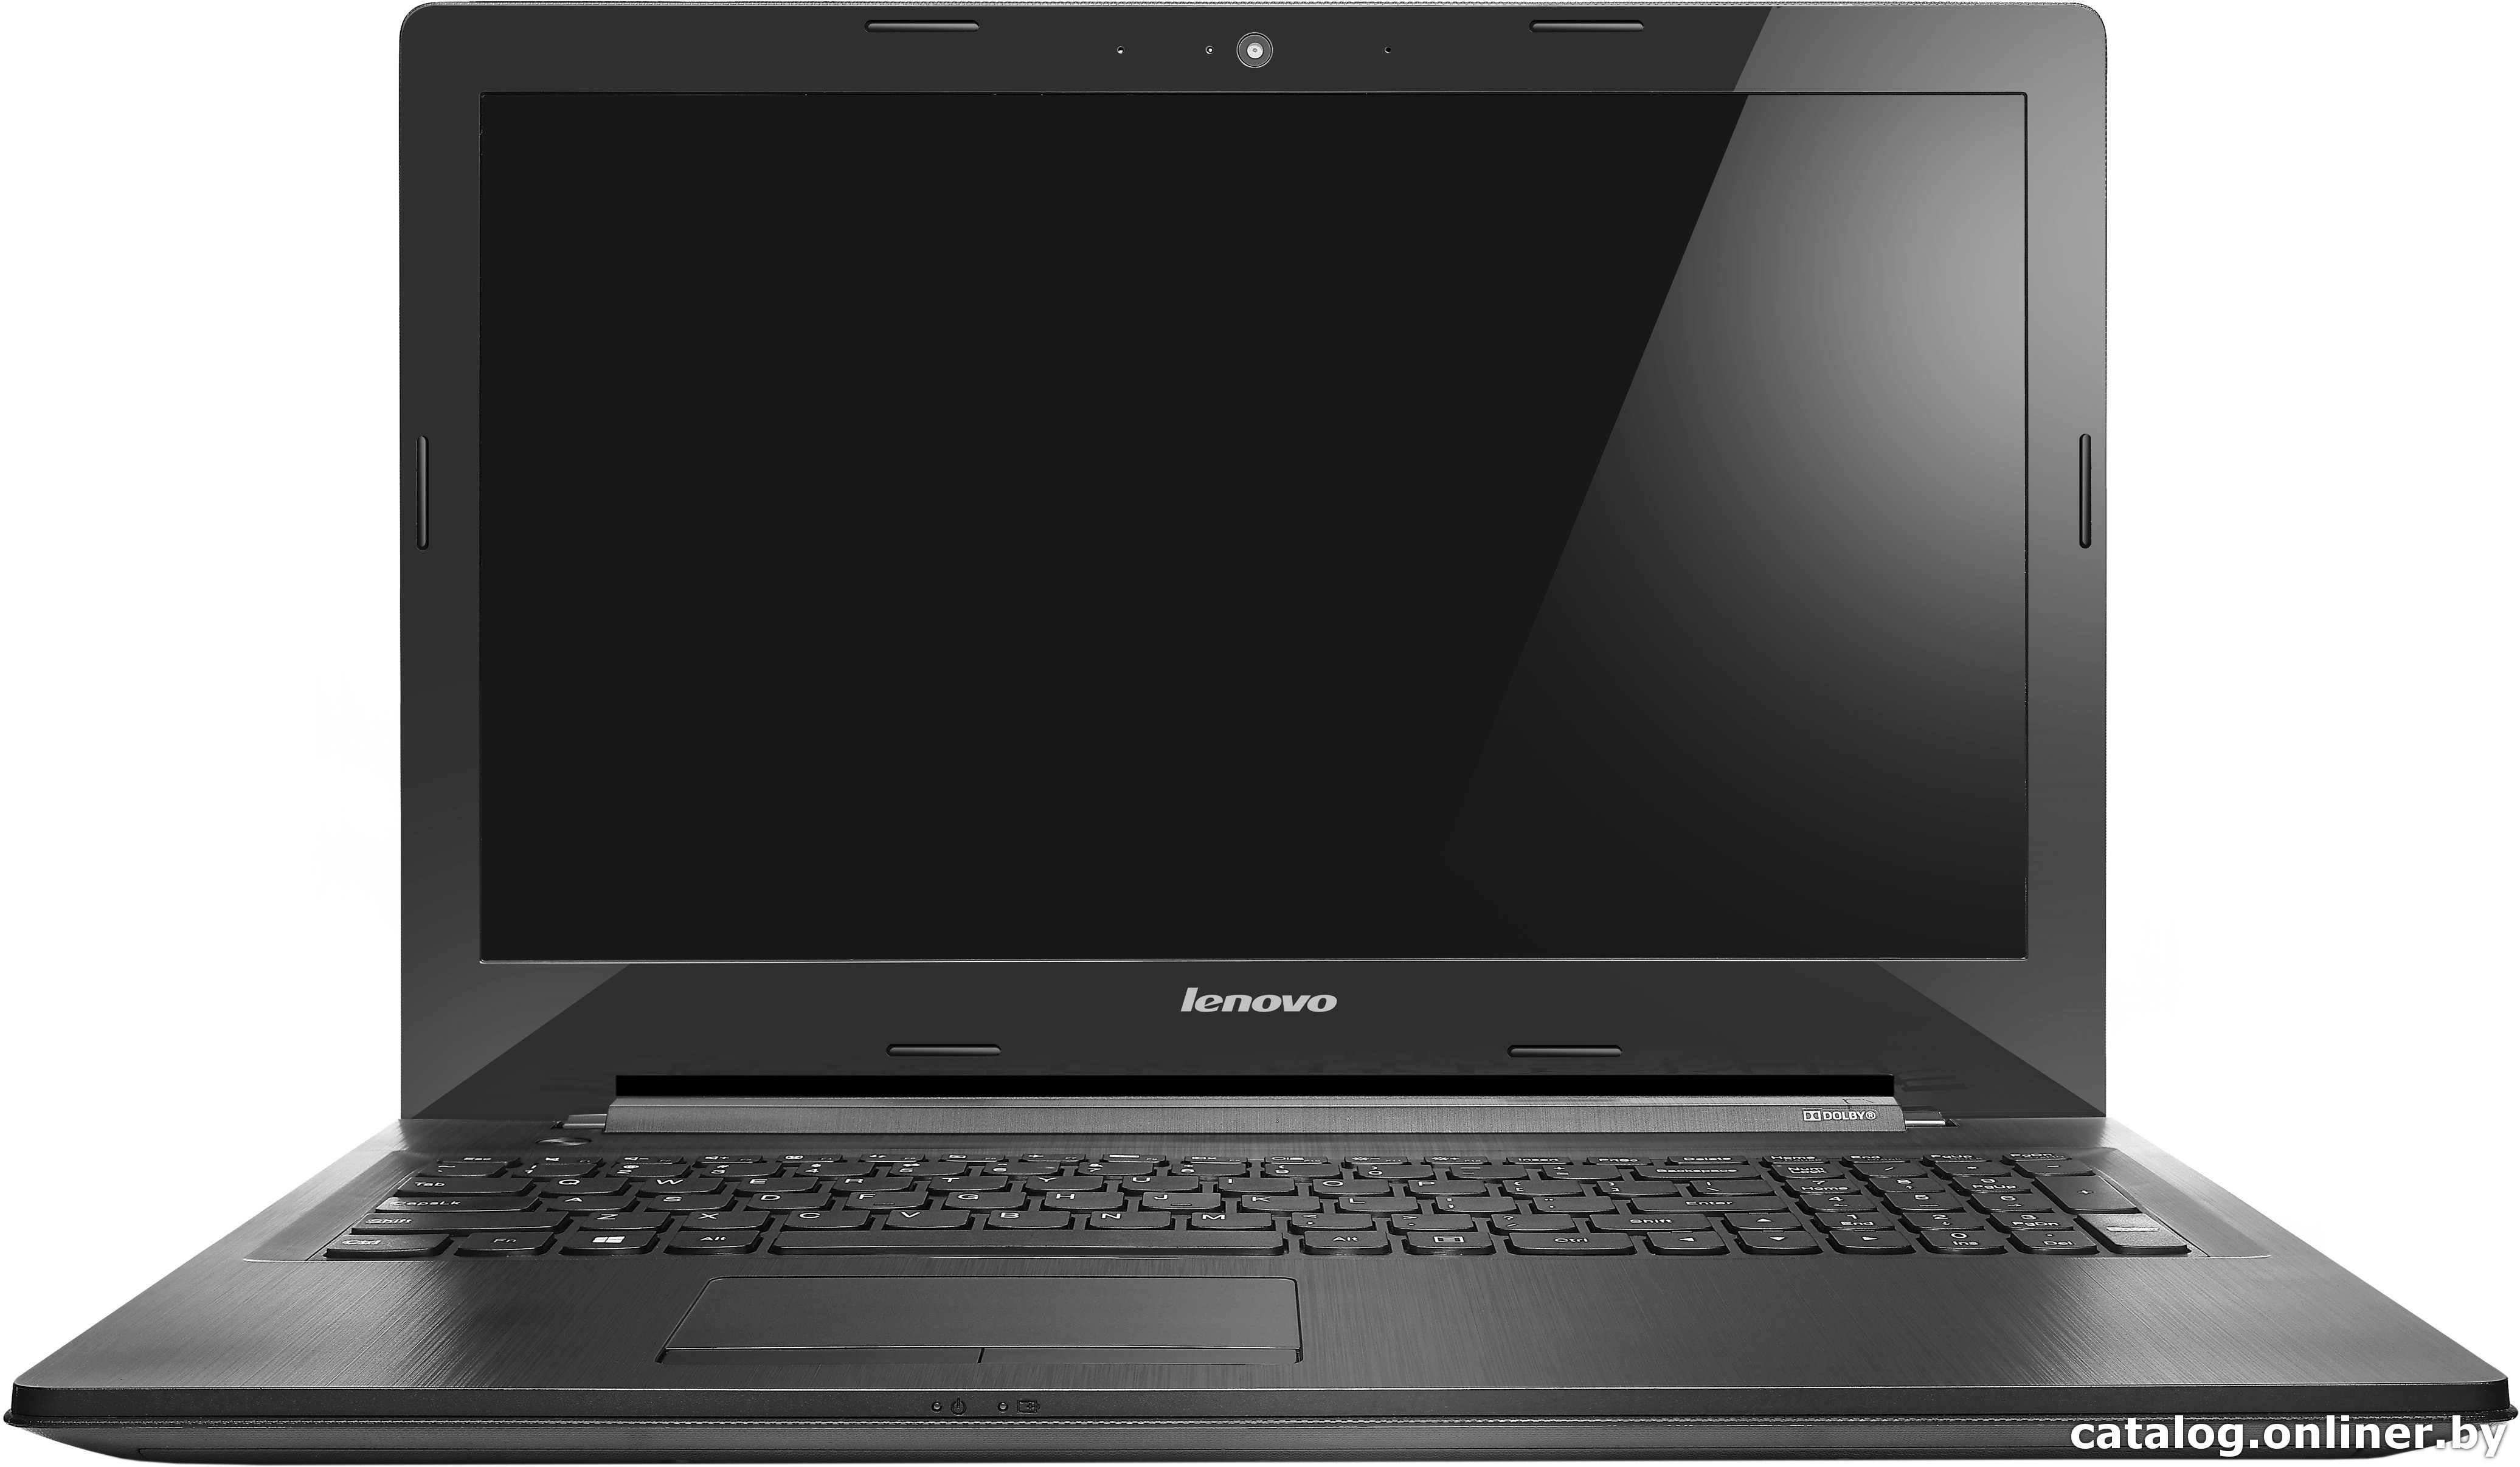 Замена клавиатуры Lenovo G50-70